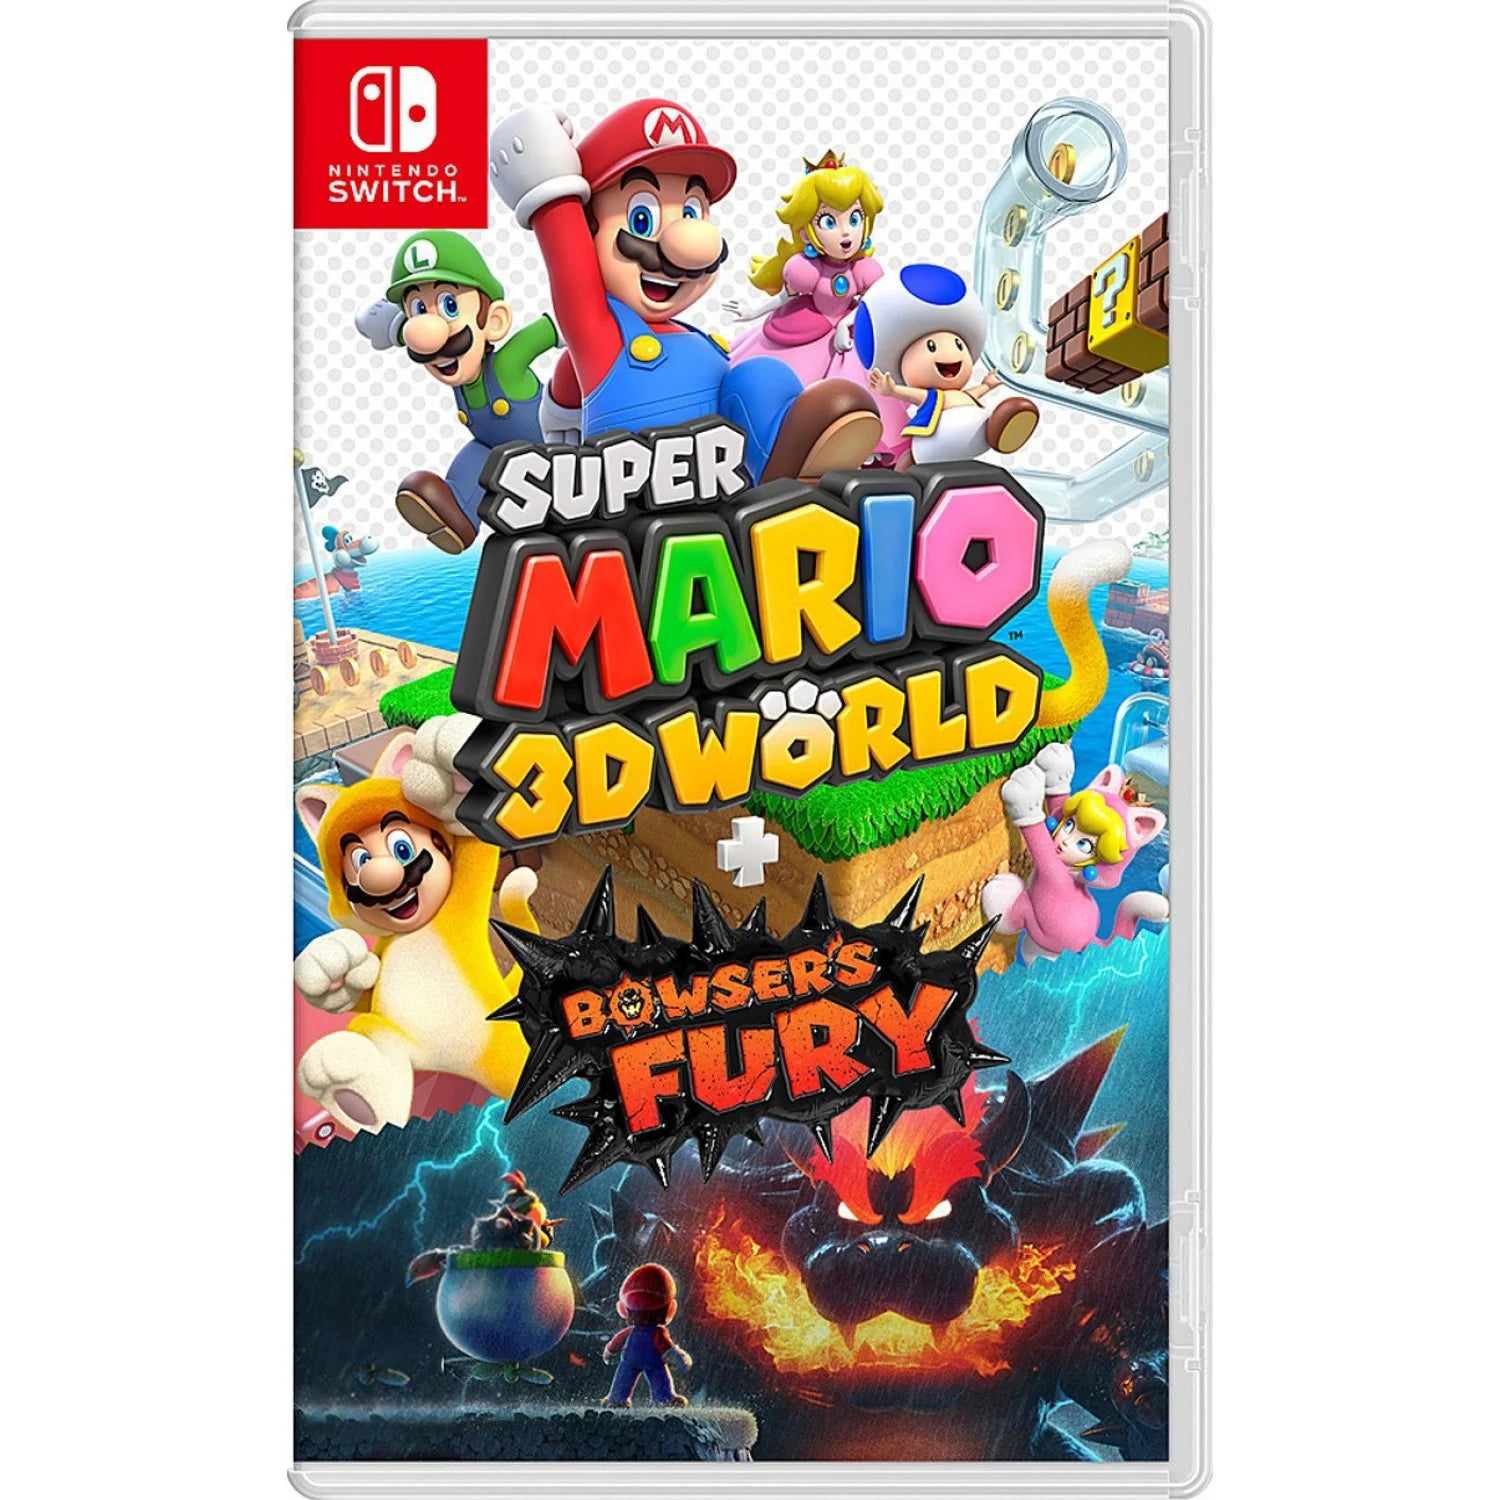 NSW Super Mario 3D World + Bowser's Fury